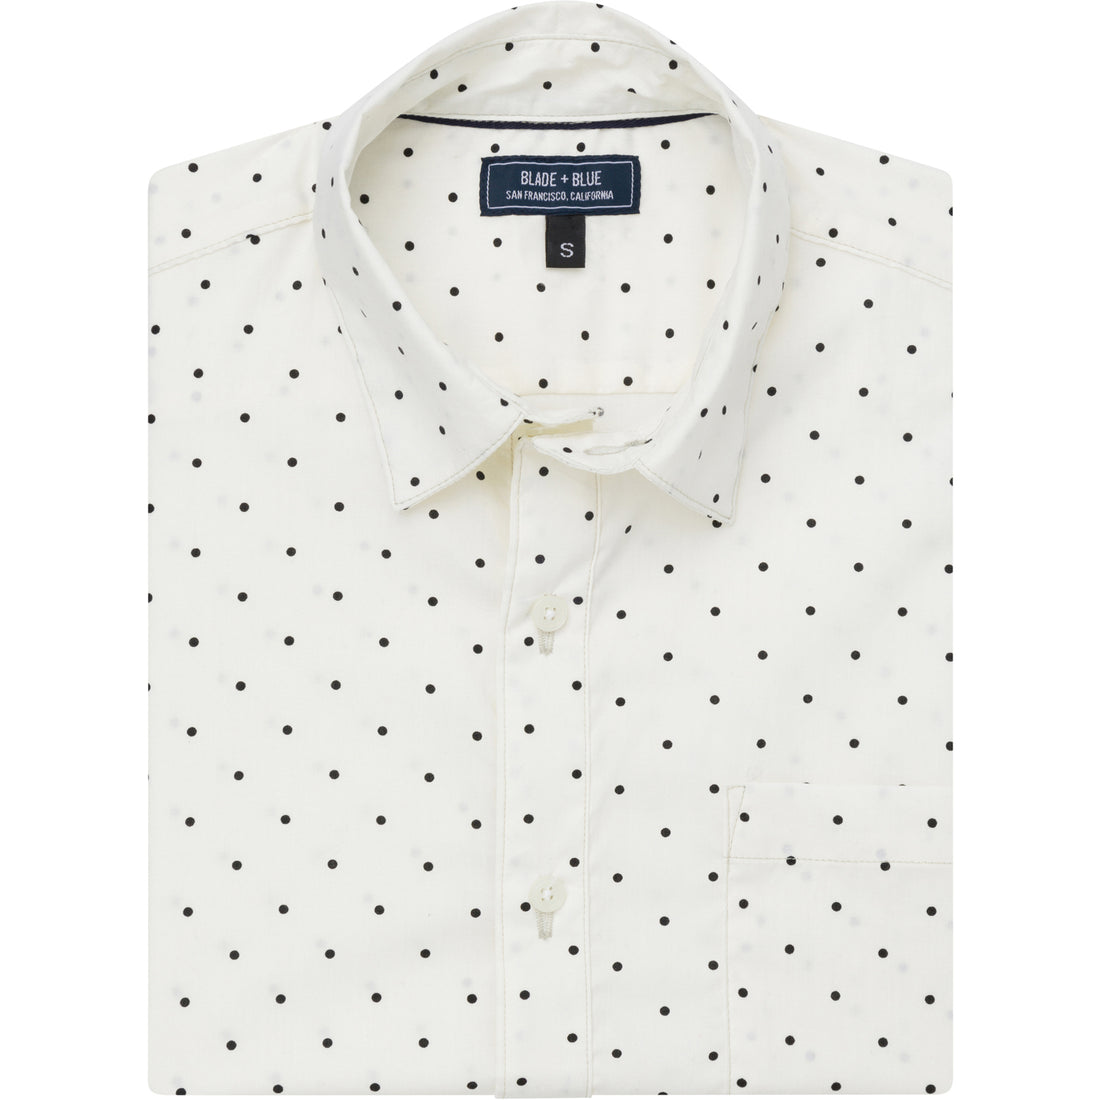 PRINCE Short Sleeve Shirt in White with Black Polka Dot Print